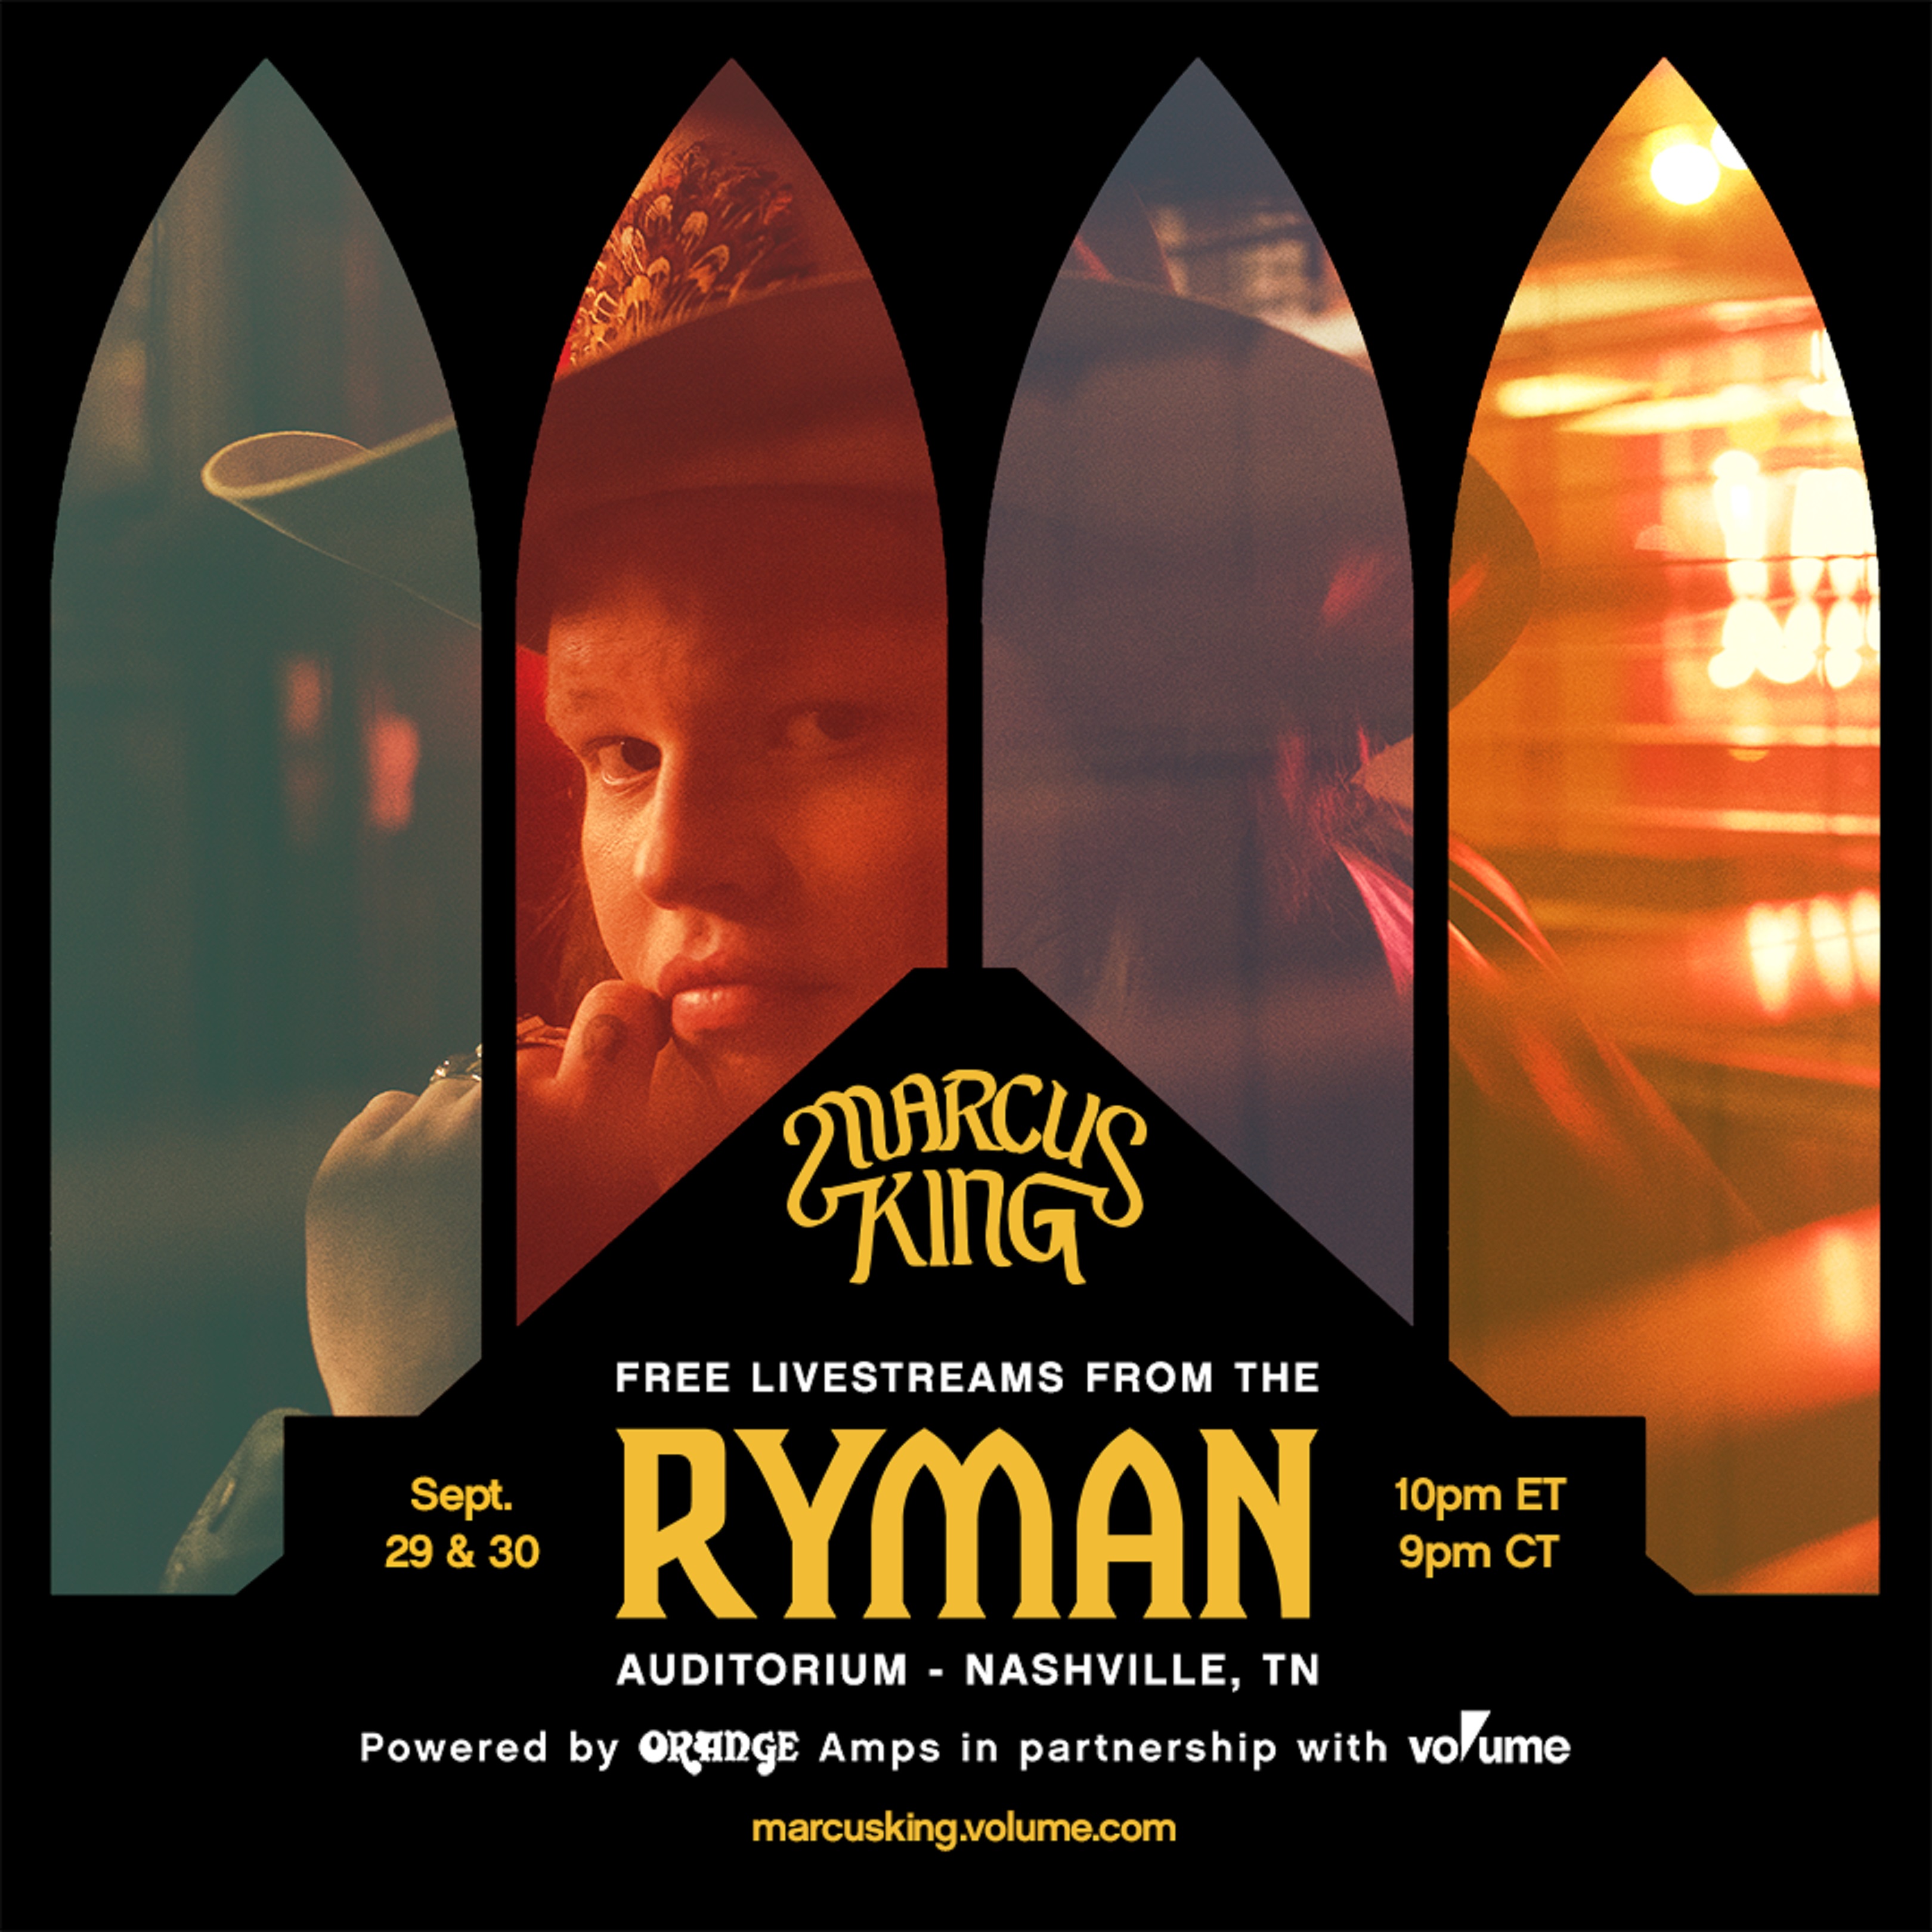 Ryman's Club: Where to Watch and Stream Online